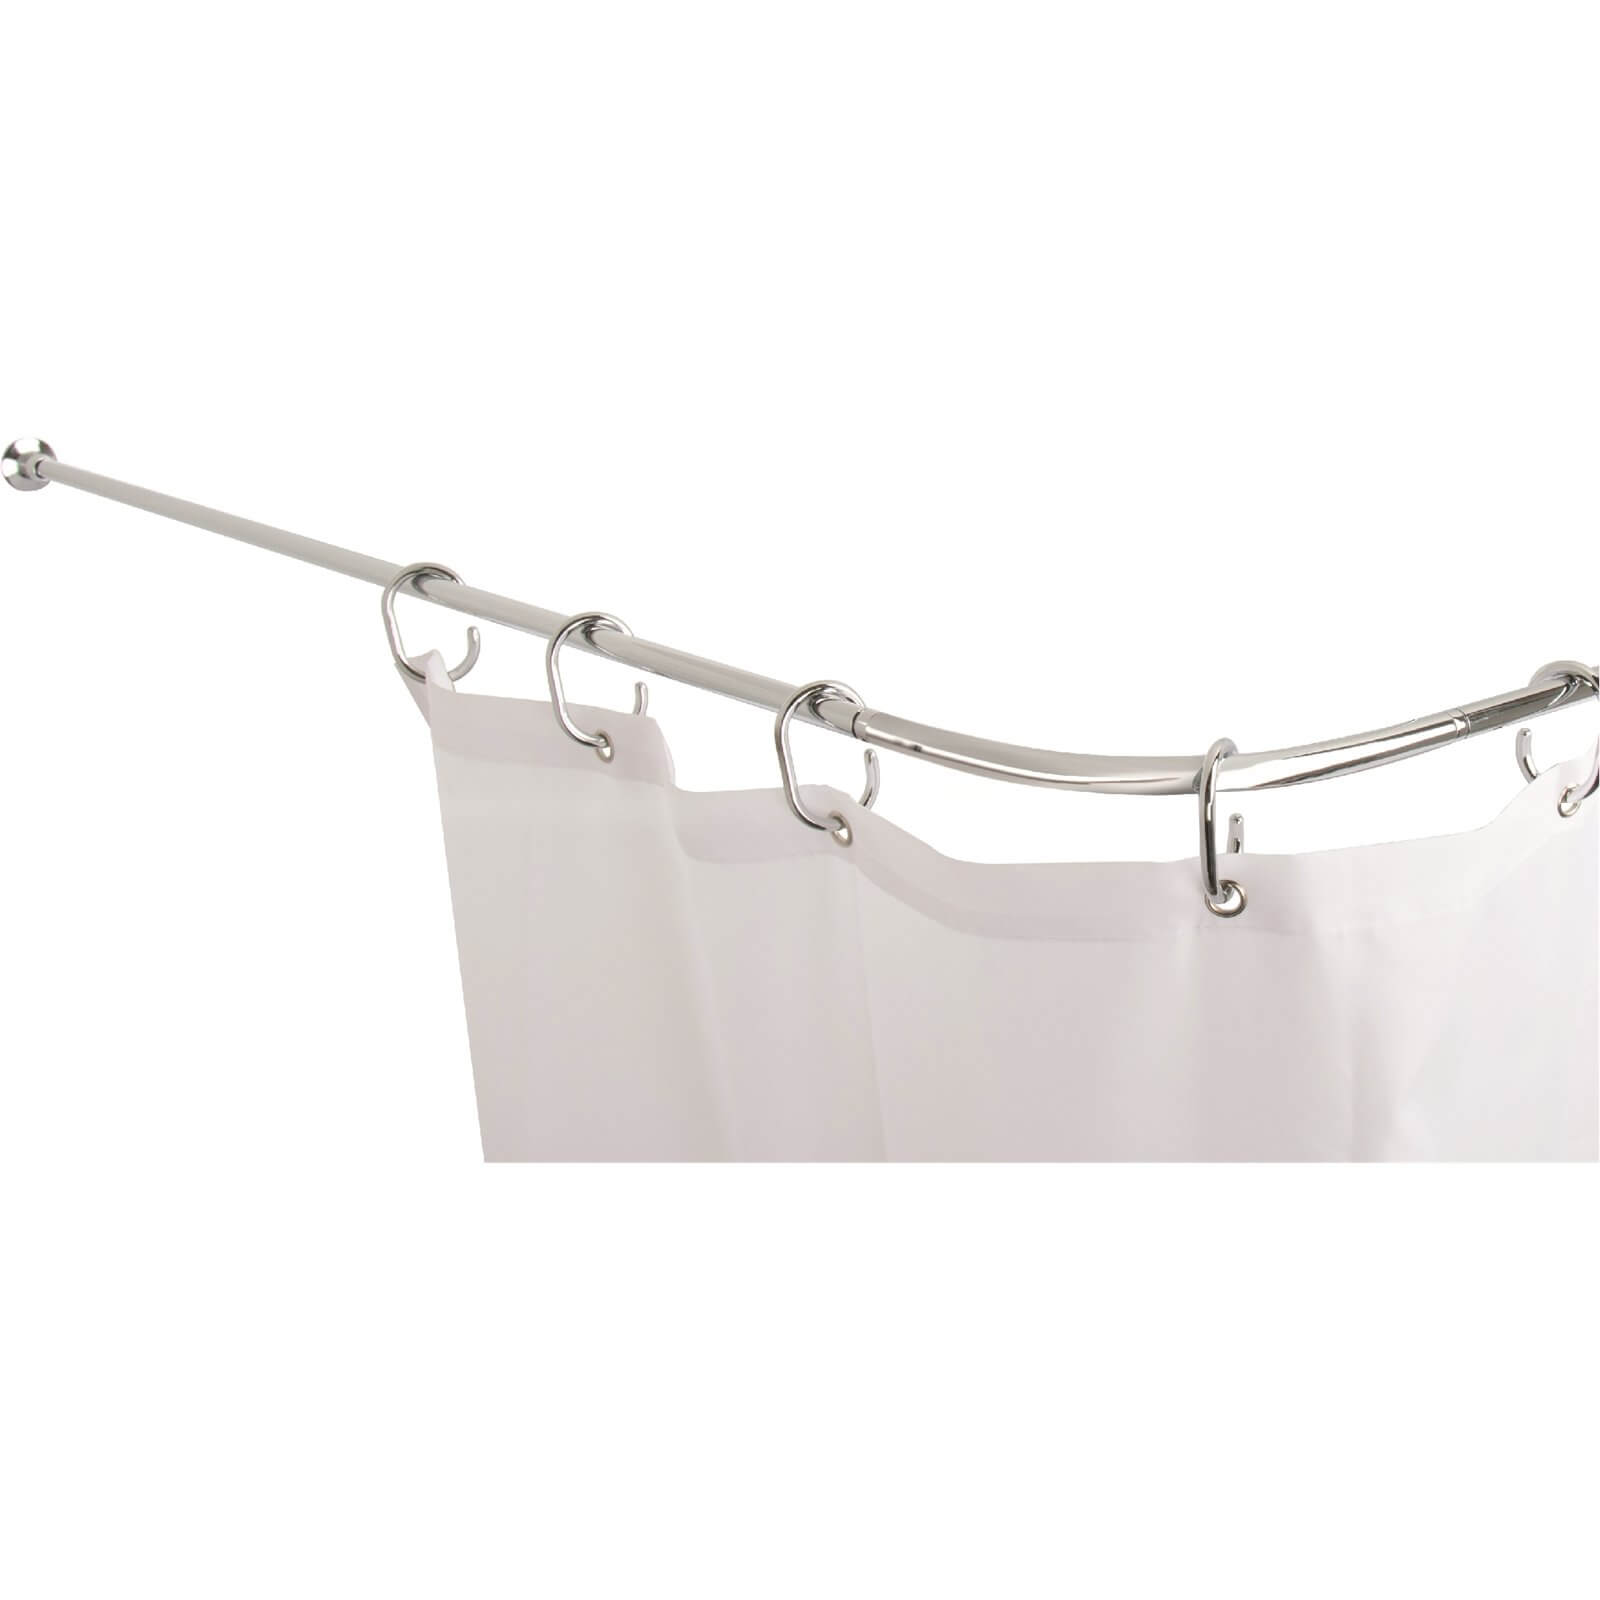 Croydex Fineline Shower Curtain Rod Set - Chrome